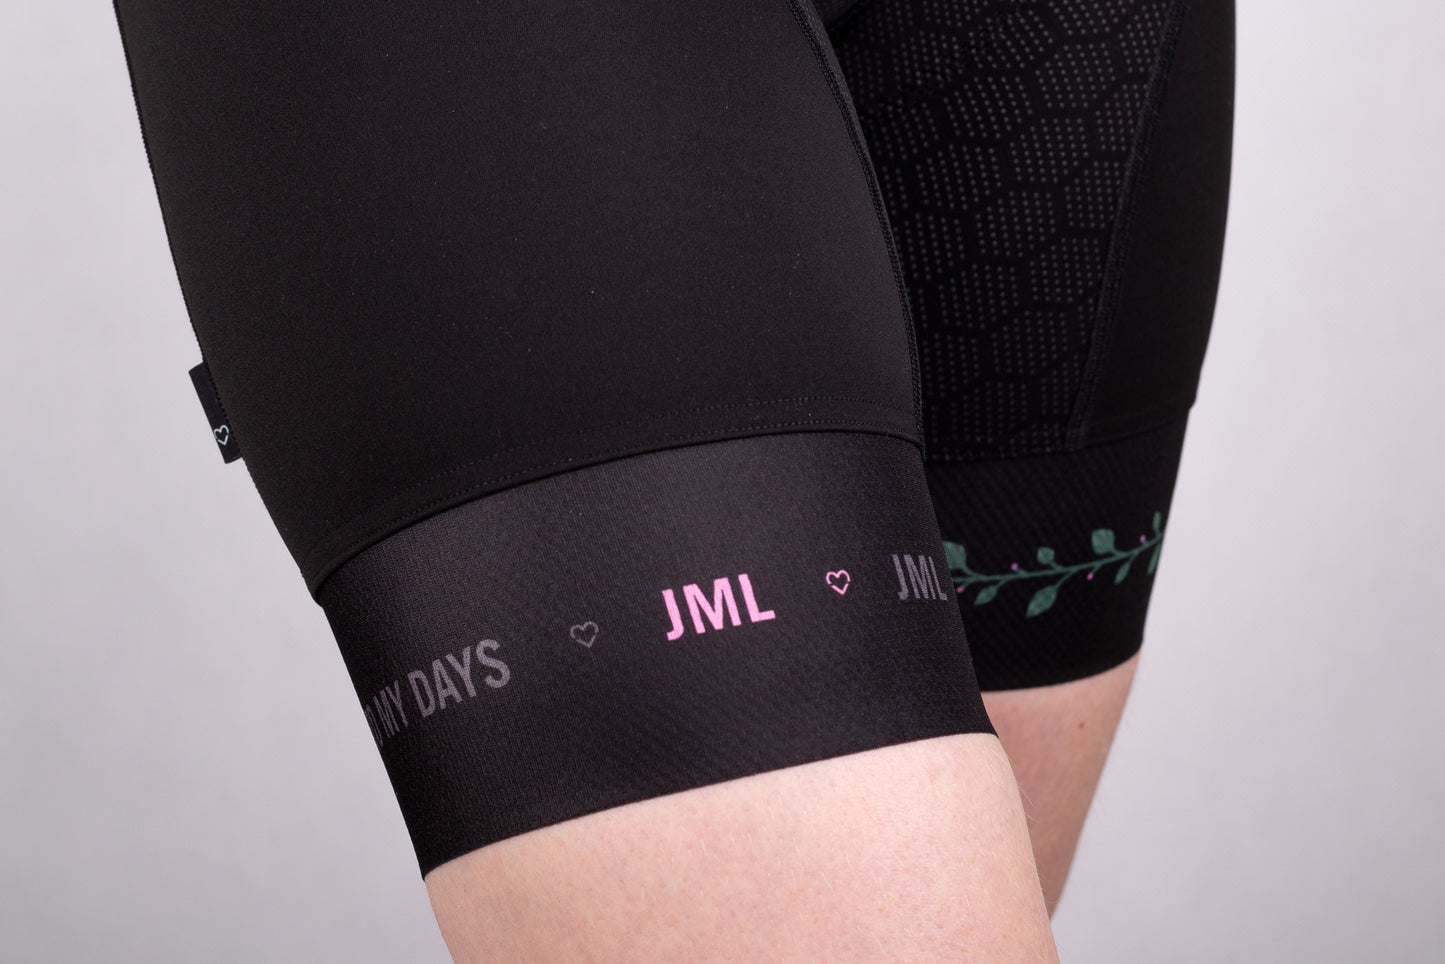 JML Torbole Bib Shorts - Jerseys Made with Love